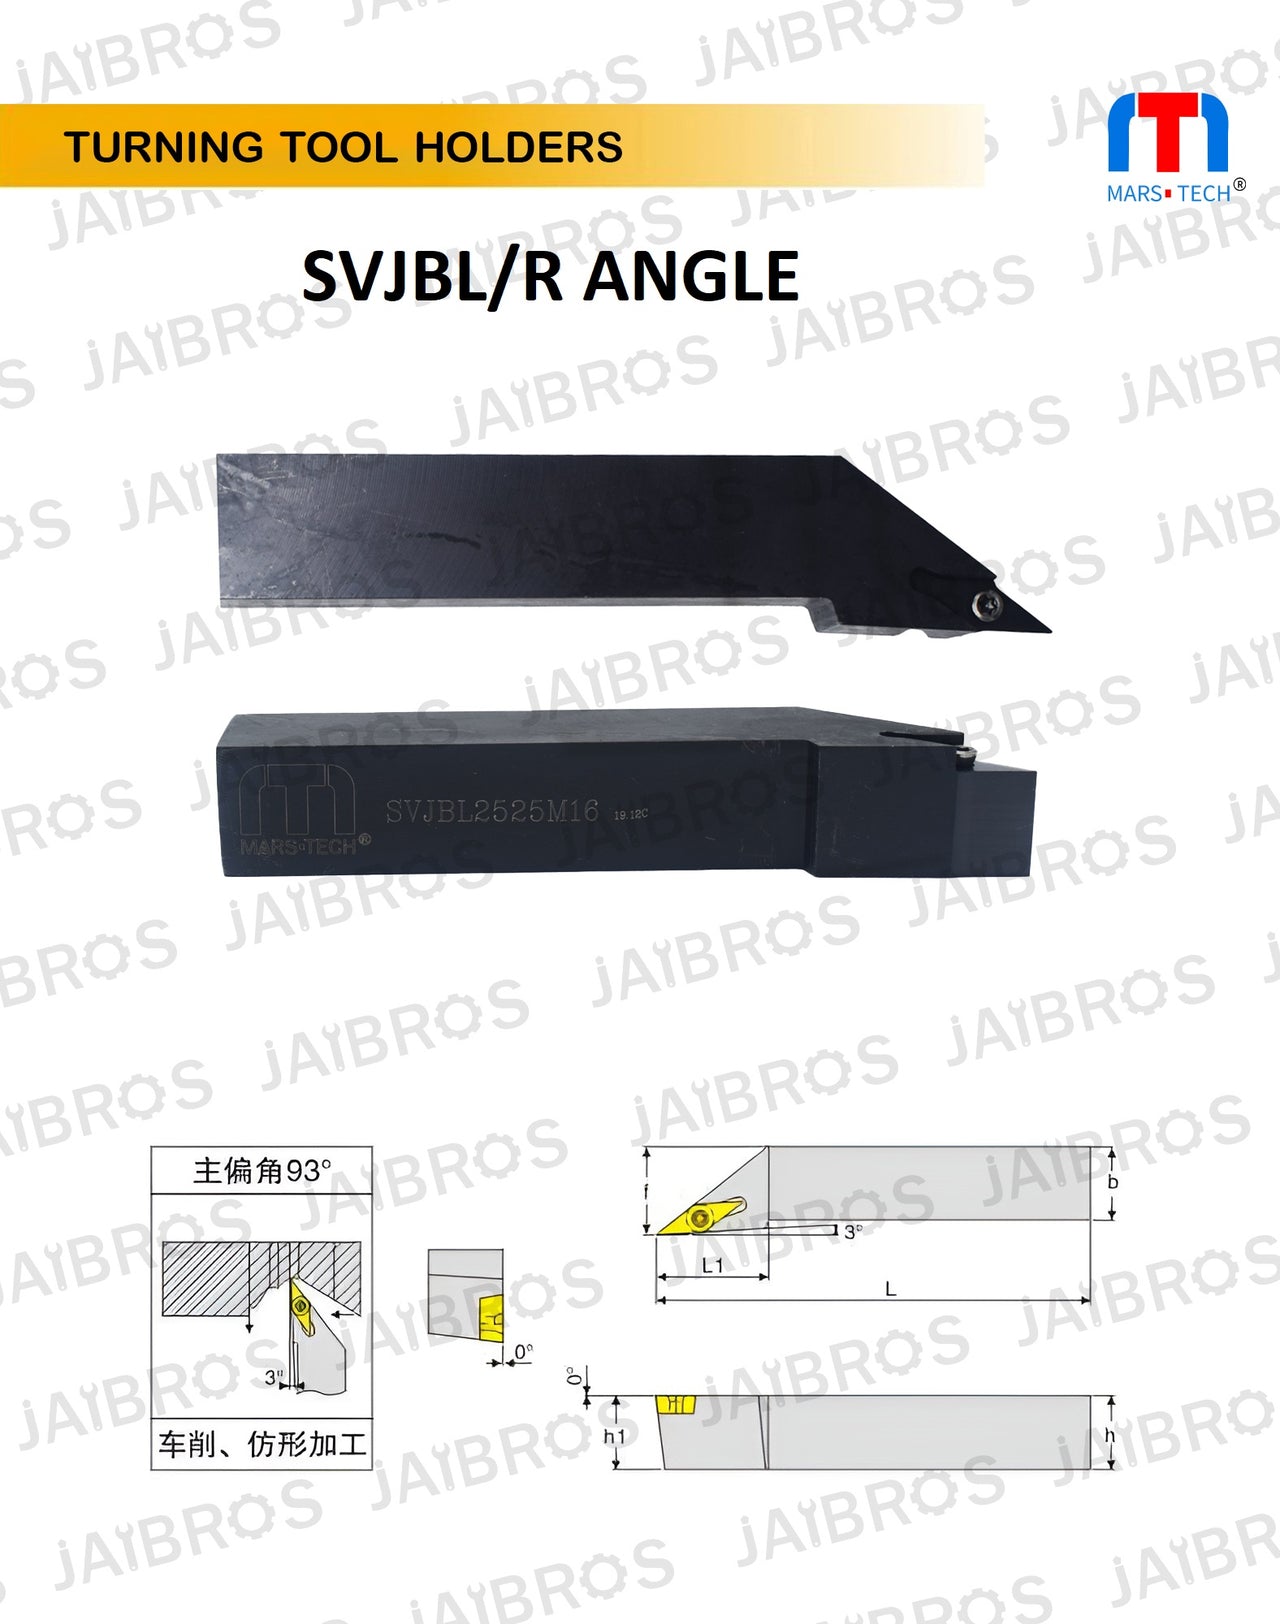 SVJBL/R vbmt holder 2525-M16 shank pack of 1